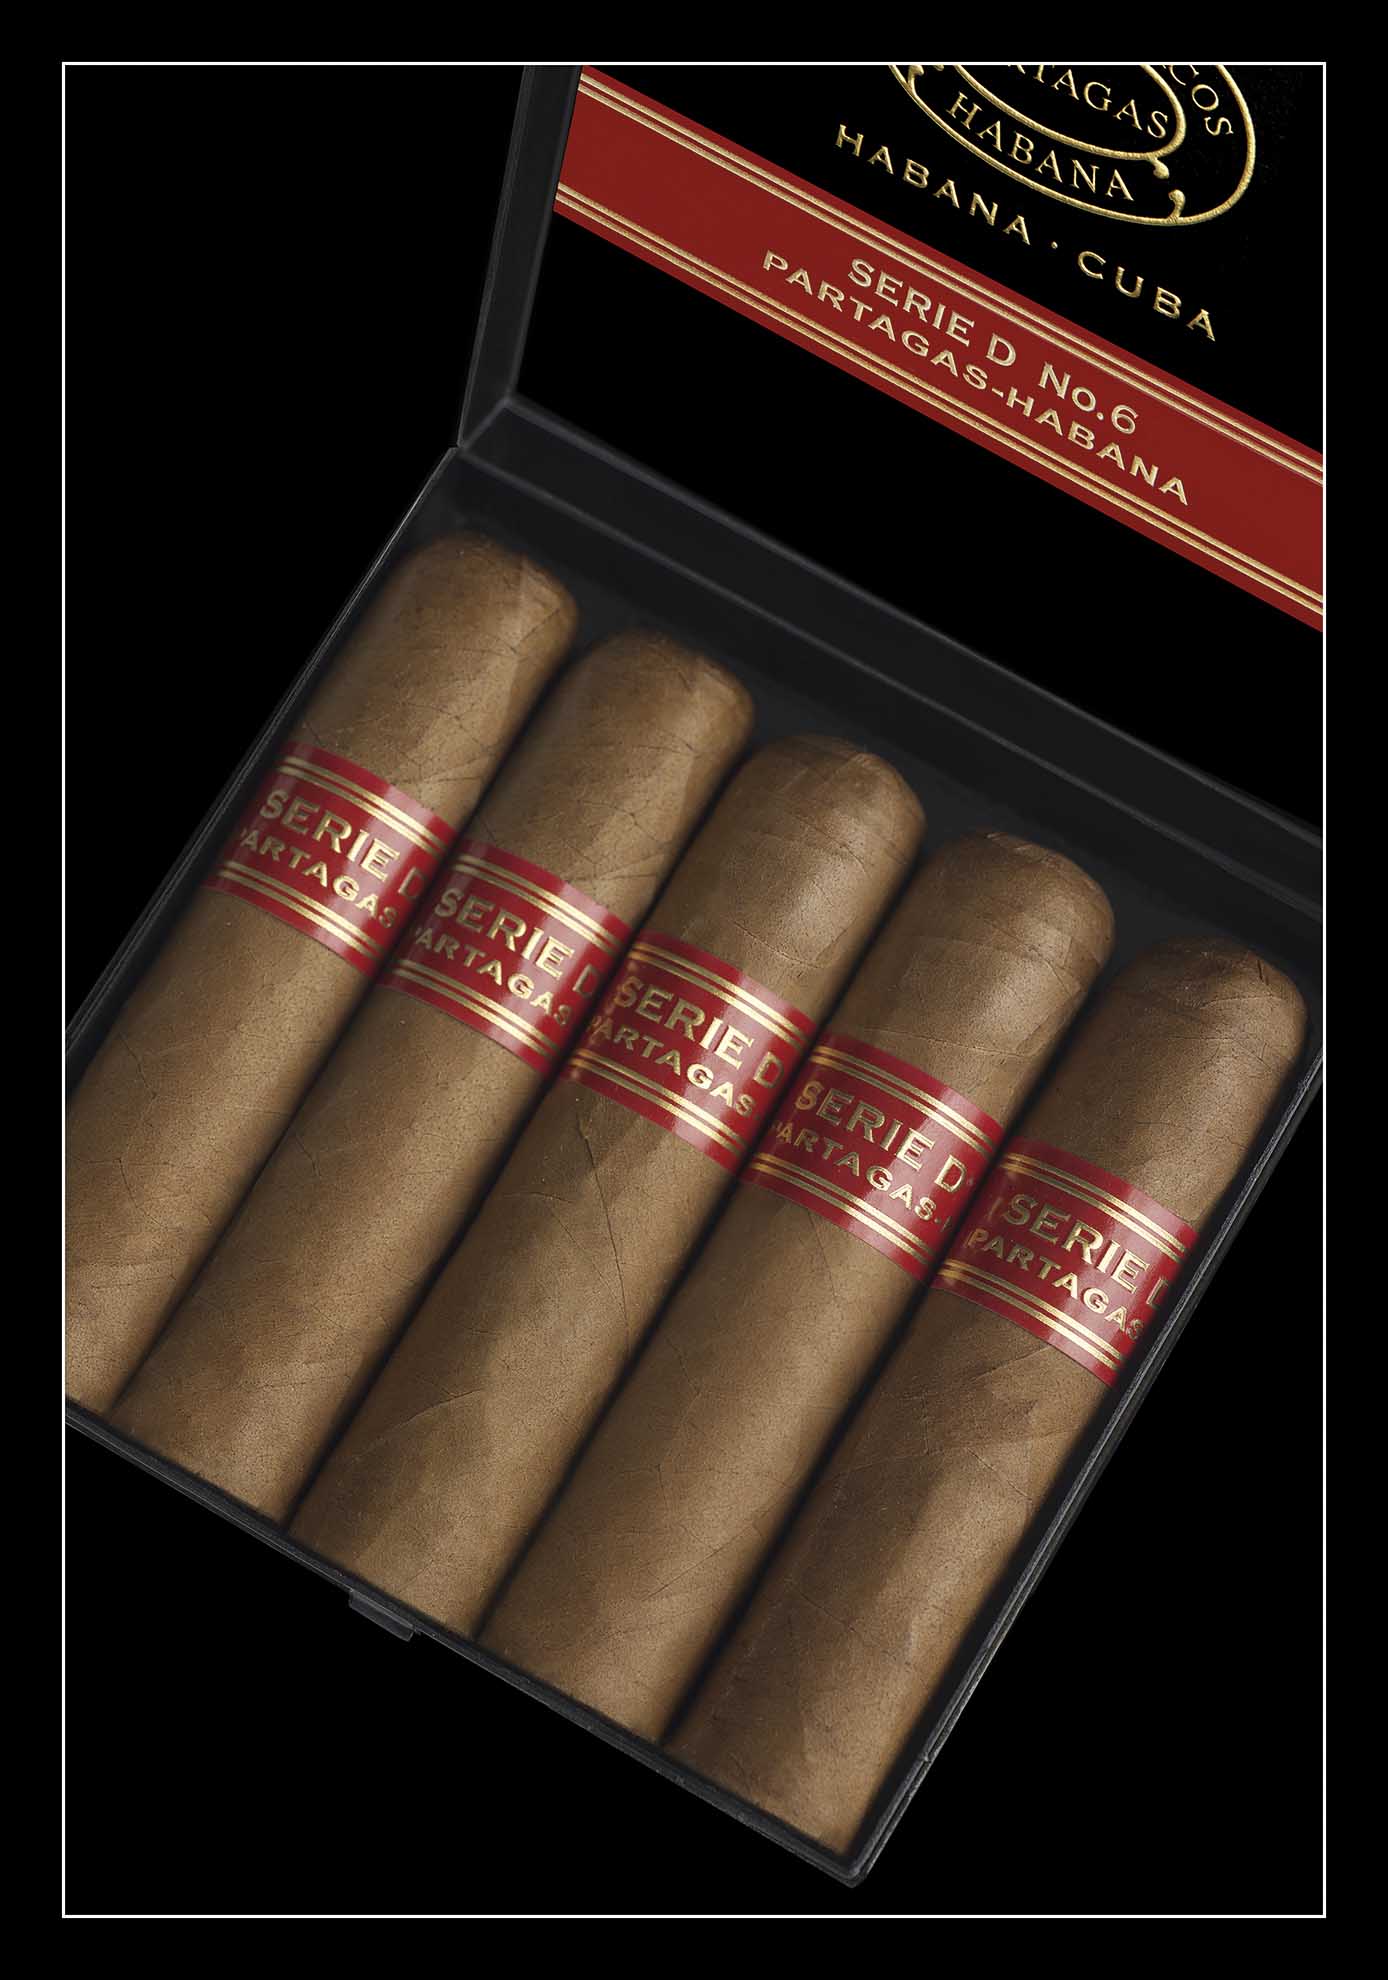 Cigar News: Partagás Serie D No.6 – All The Taste In A Wrap